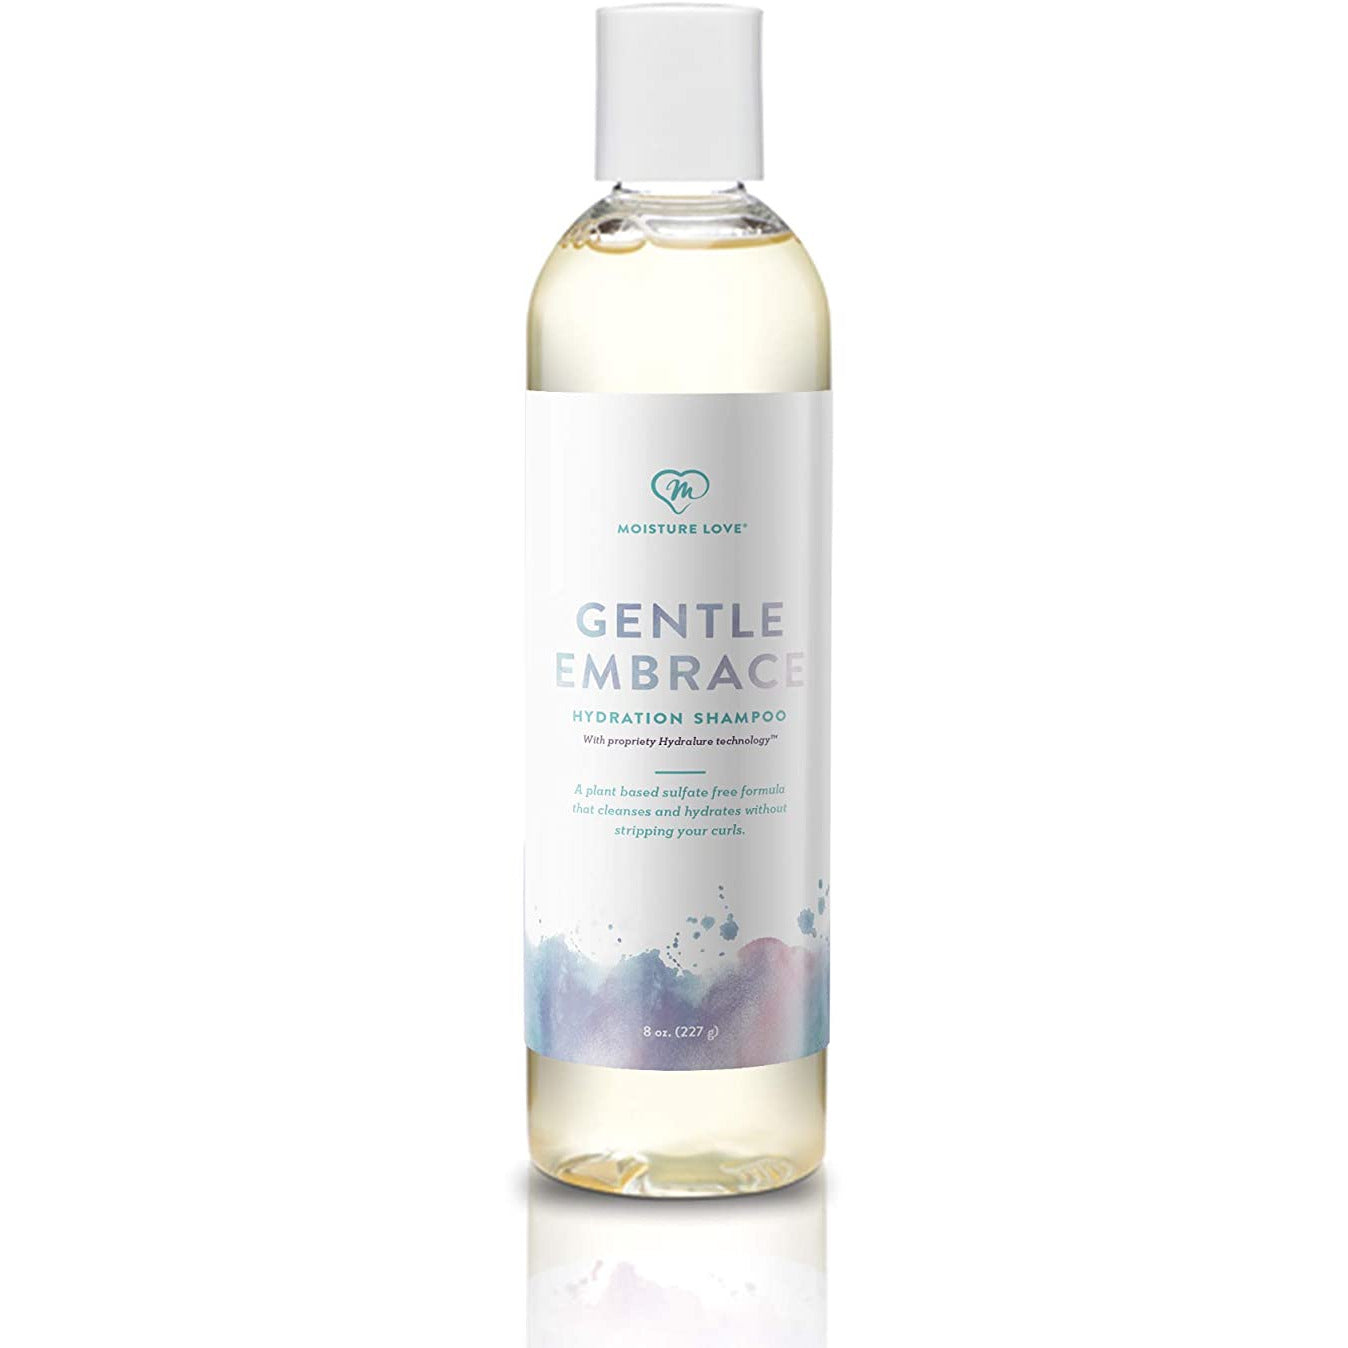 Moisture Love Hydration Shampoo Gentle Embrace, 8 Oz